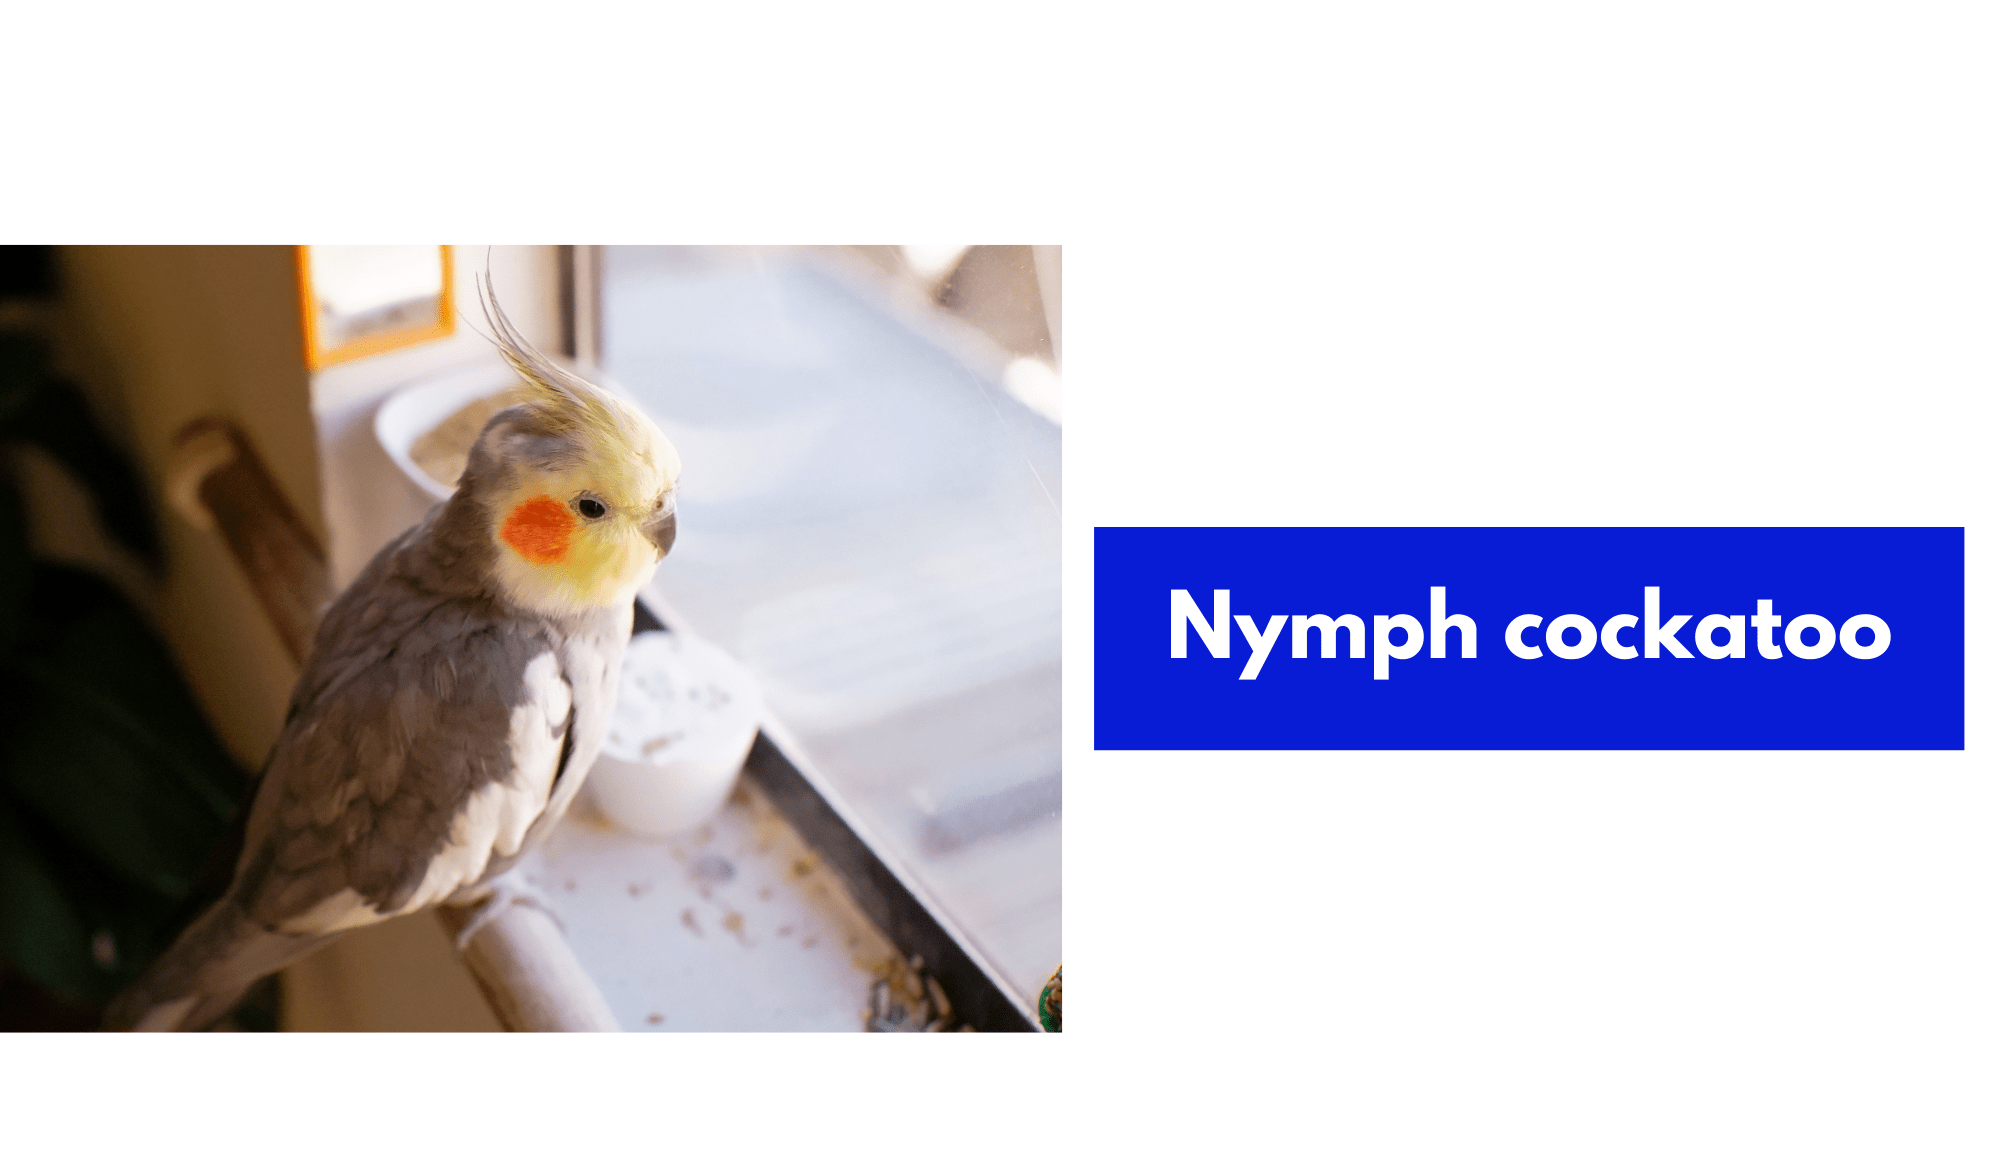 Nymph cockatoo